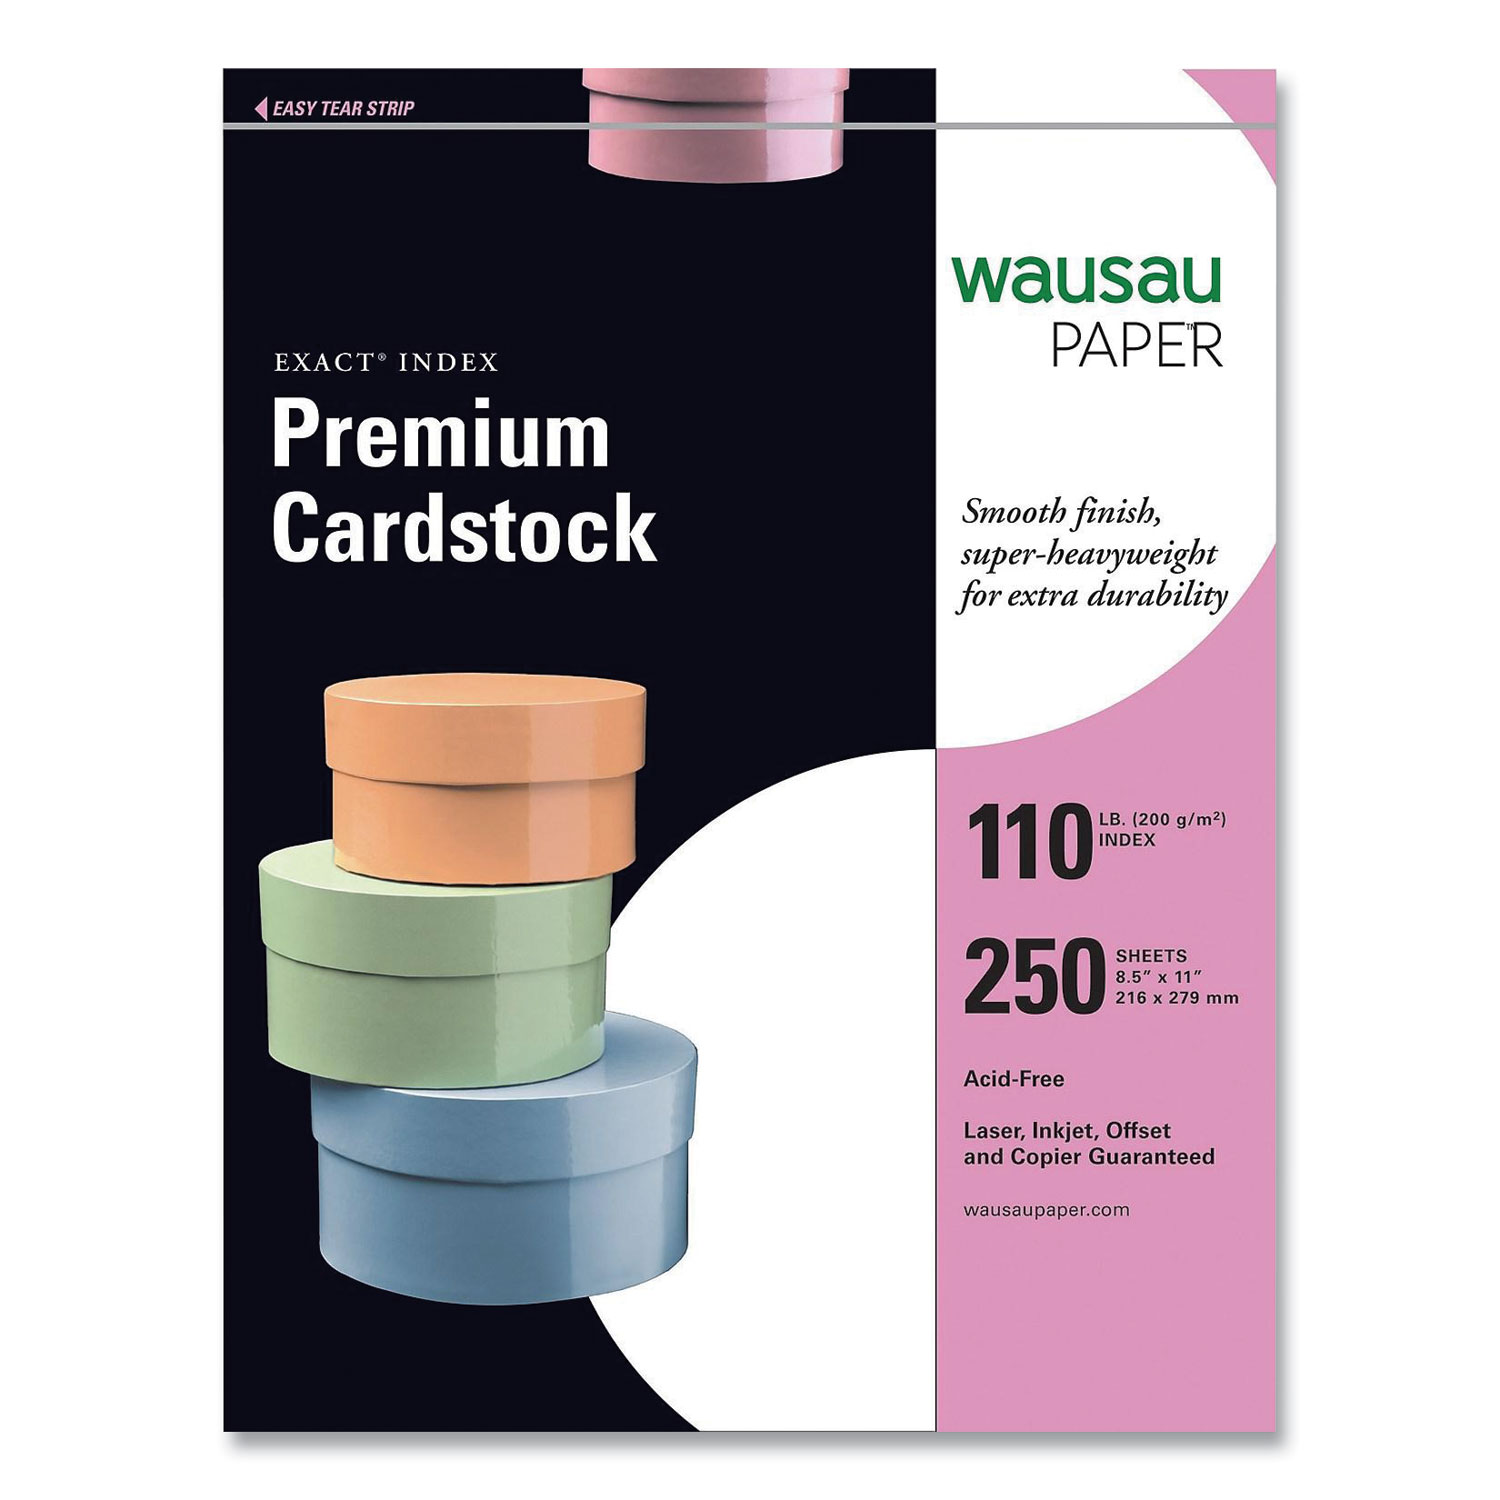 Neenah Creative Collection Naturals Premium Cardstock, 8.5 x 11 in